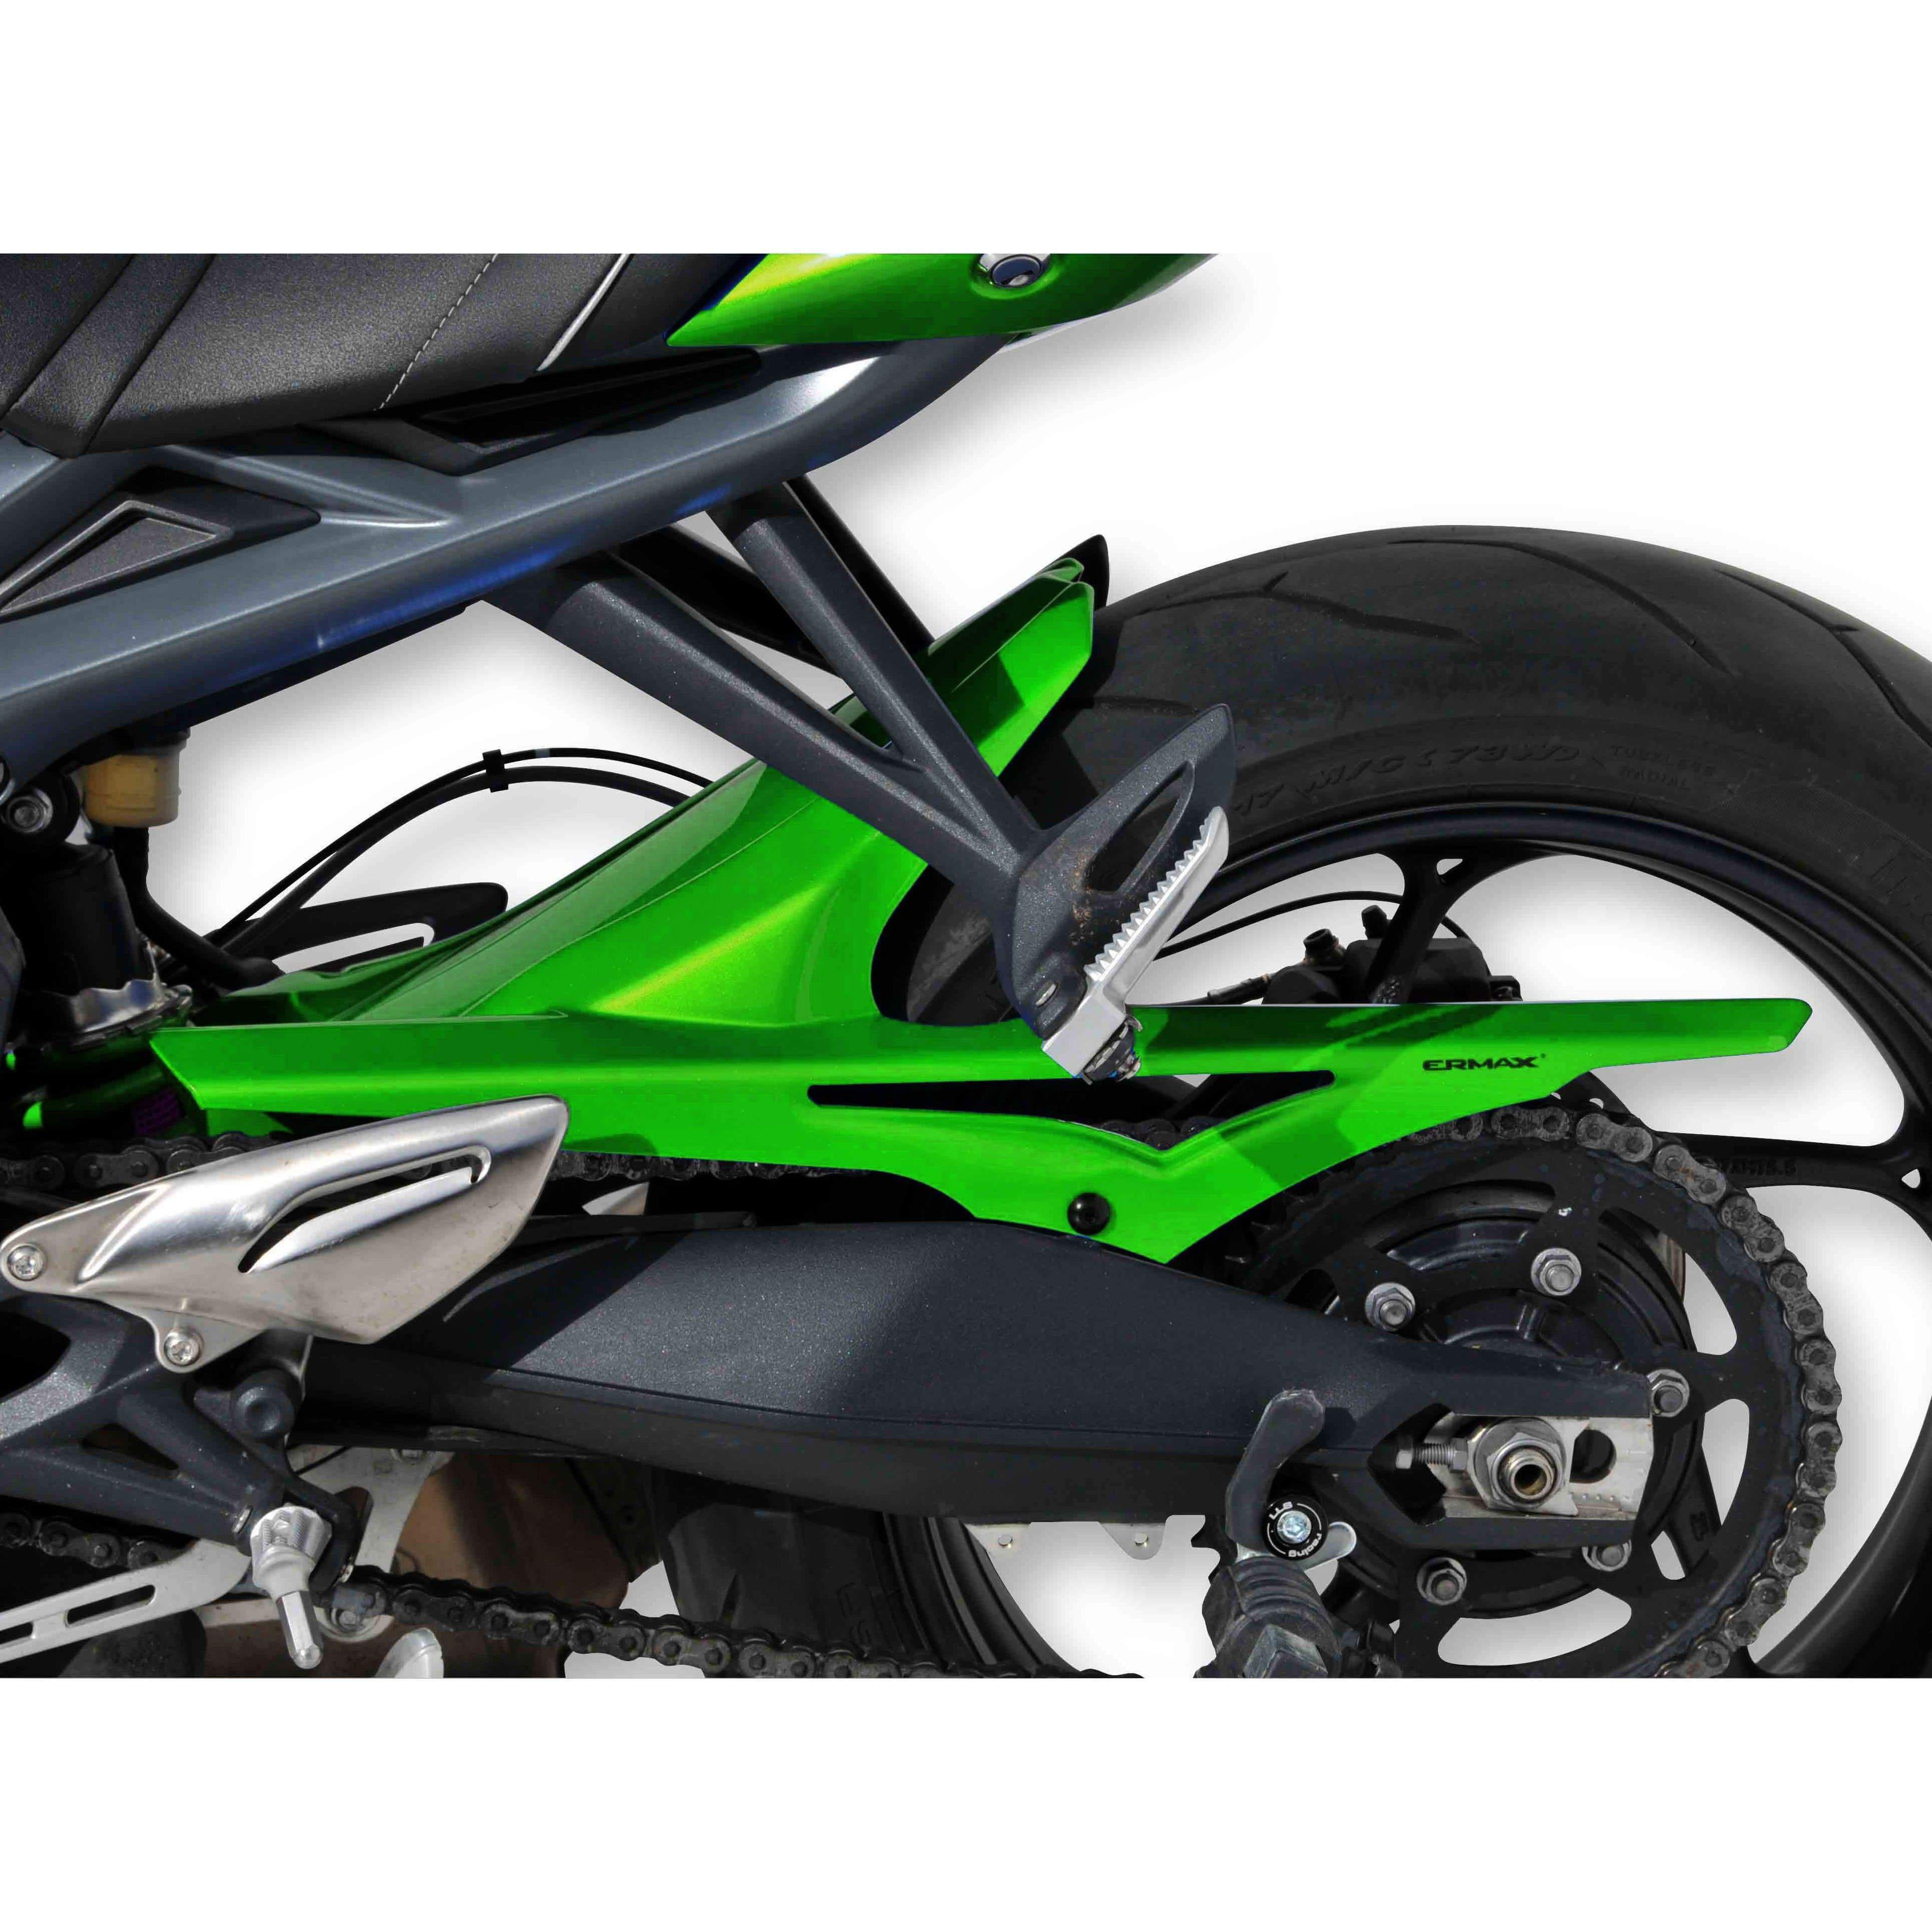 Ermax Hugger | Metallic Green (Cosmic Green) | Triumph Street Triple 675 R 2013>2013-E732124034-Huggers-Pyramid Motorcycle Accessories